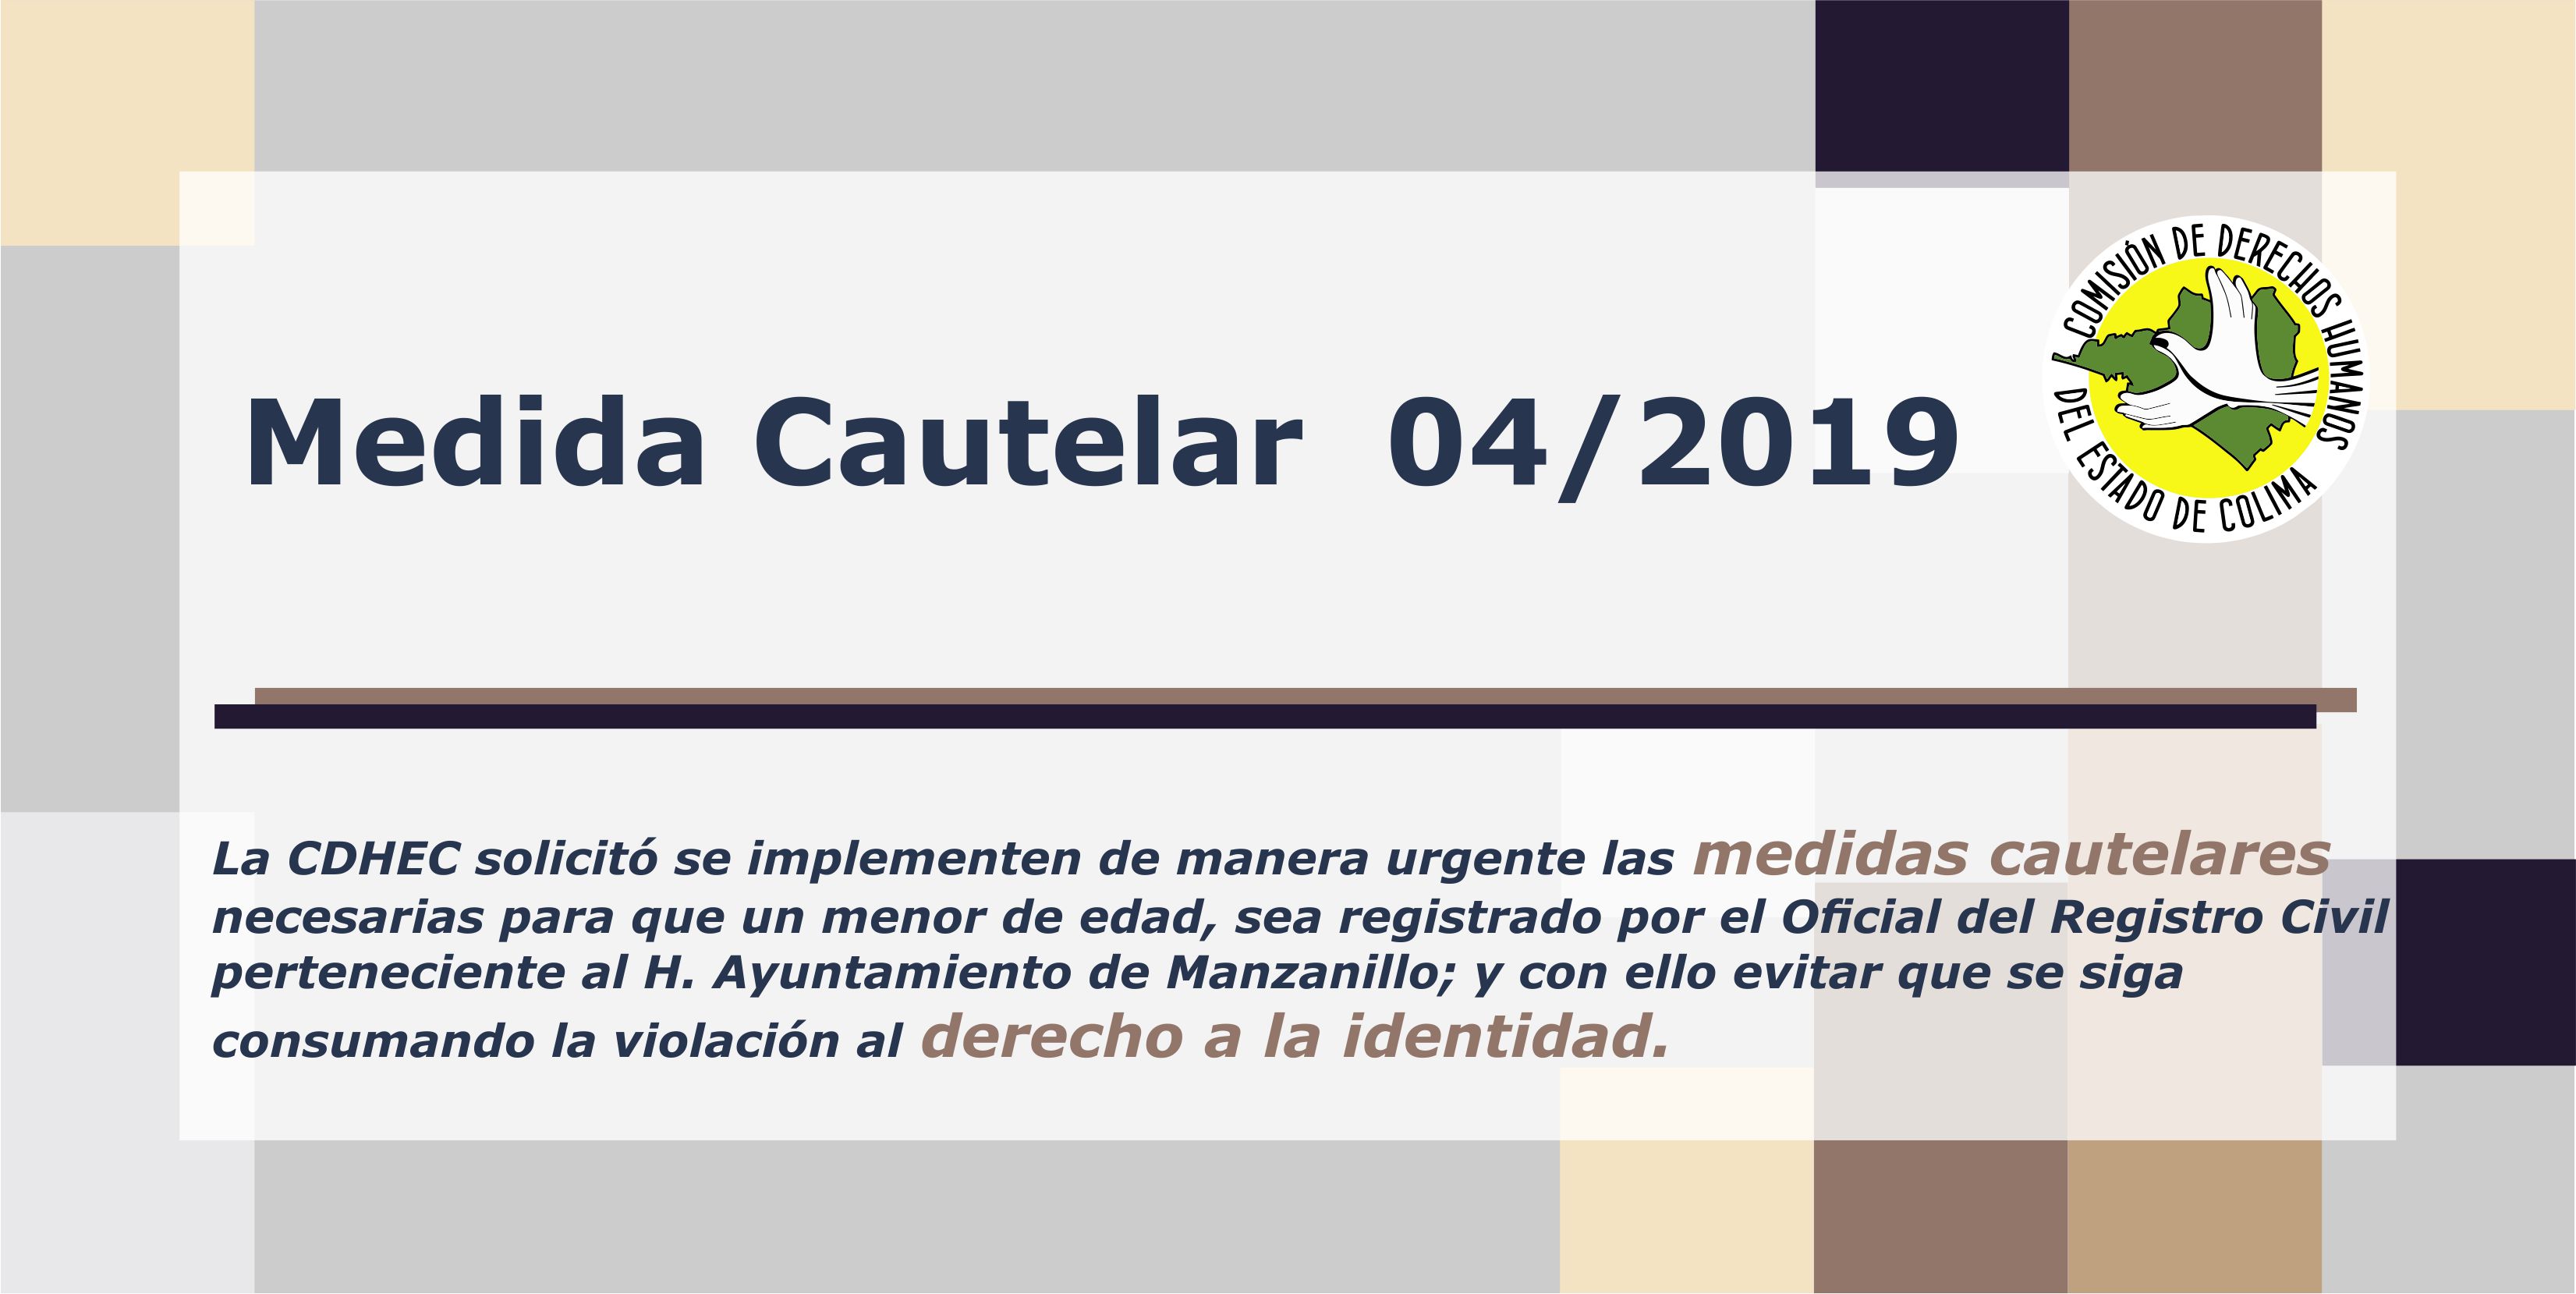 Medida Cautelar 04/2019